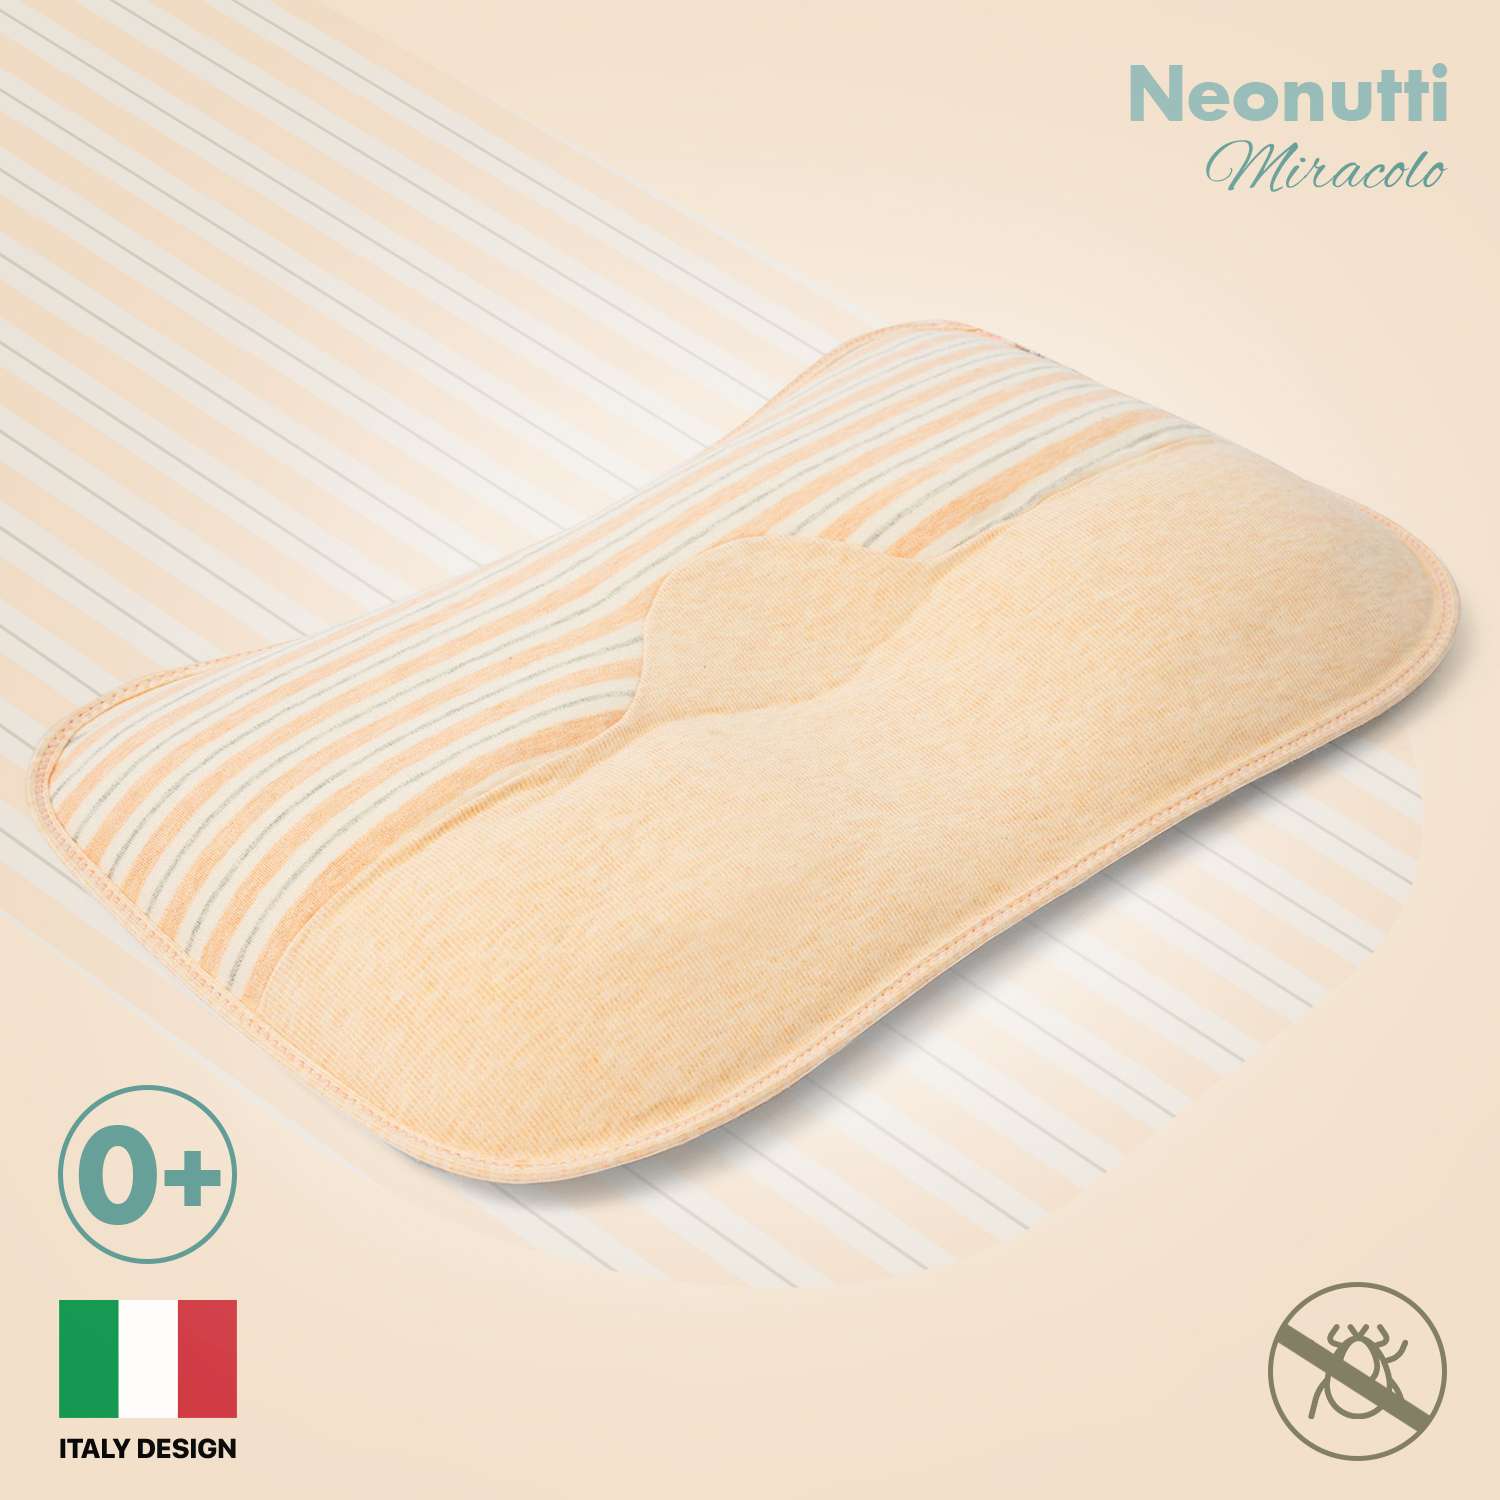 Подушка для новорожденного Nuovita Neonutti Miracolo Dipinto персиковая - фото 2